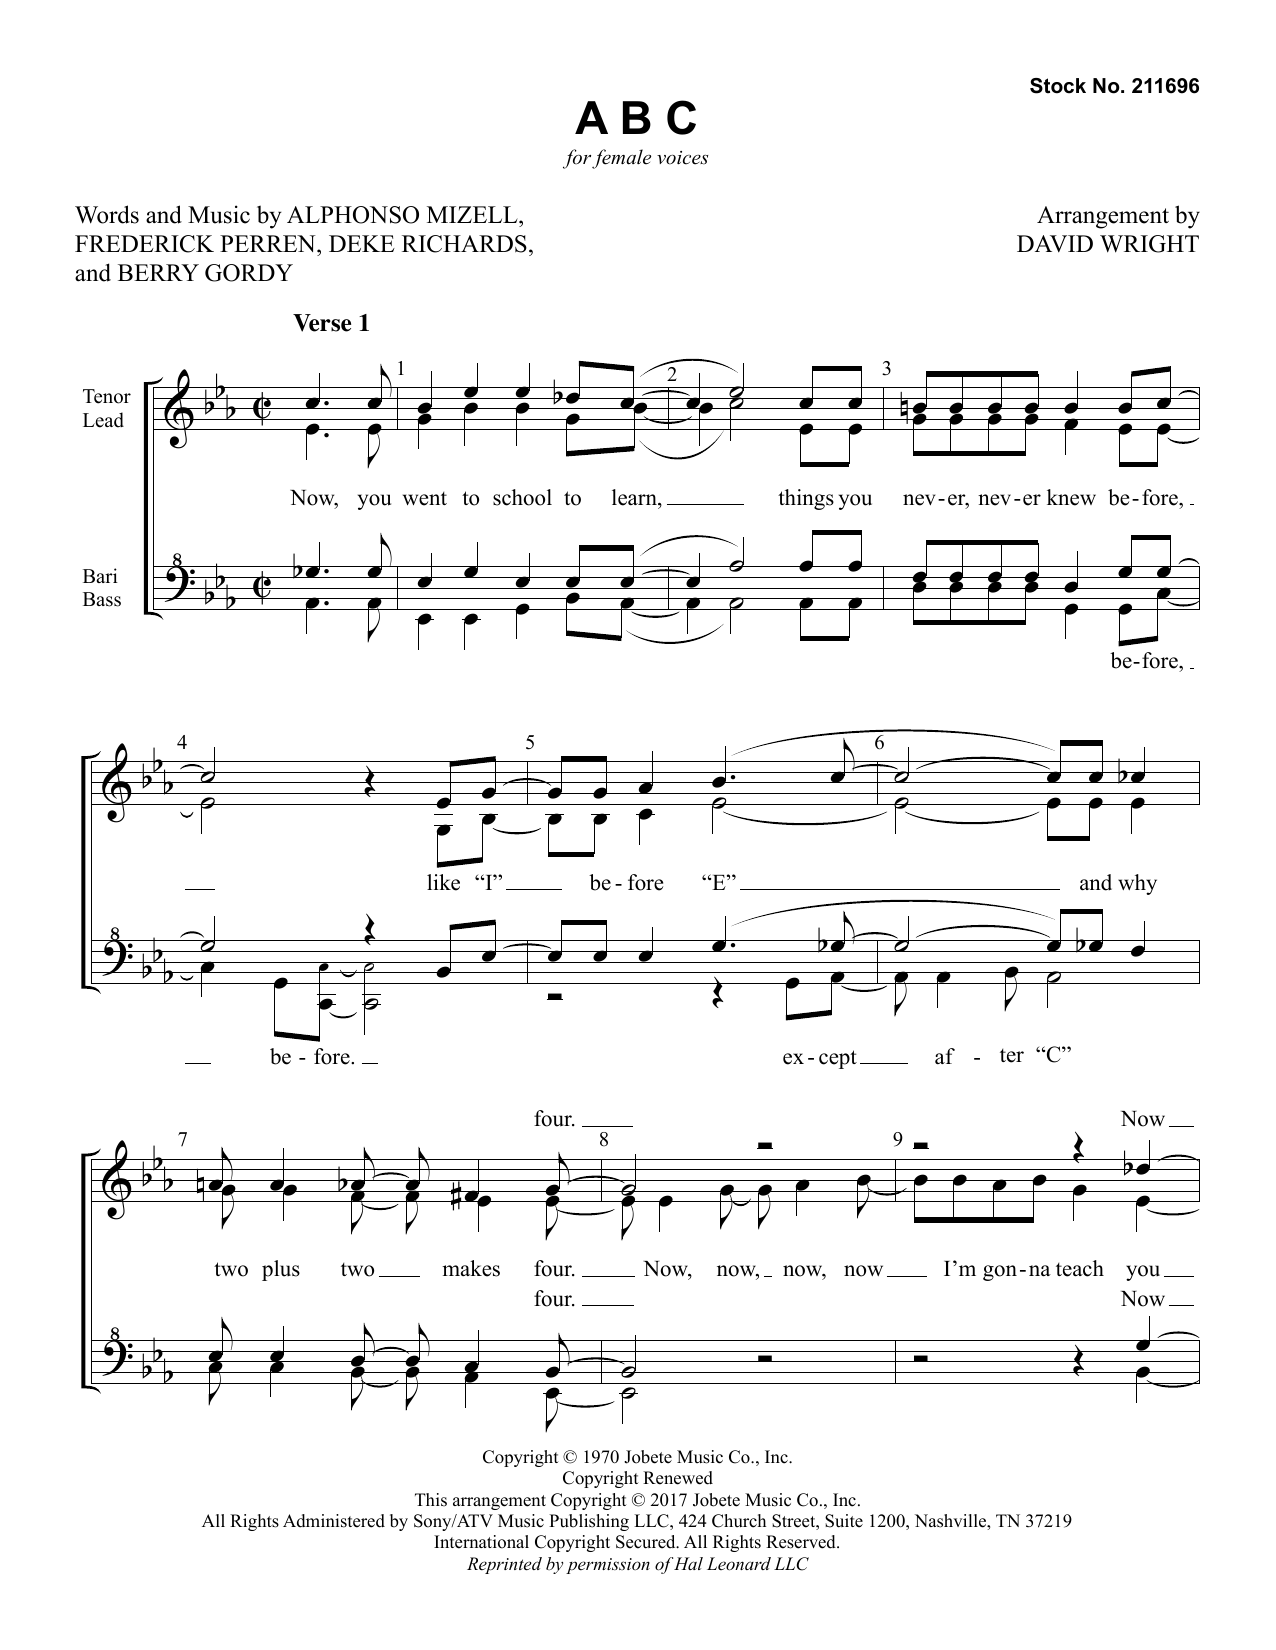 Jackson 5 ABC (arr. David Wright) Sheet Music Notes & Chords for TTBB Choir - Download or Print PDF